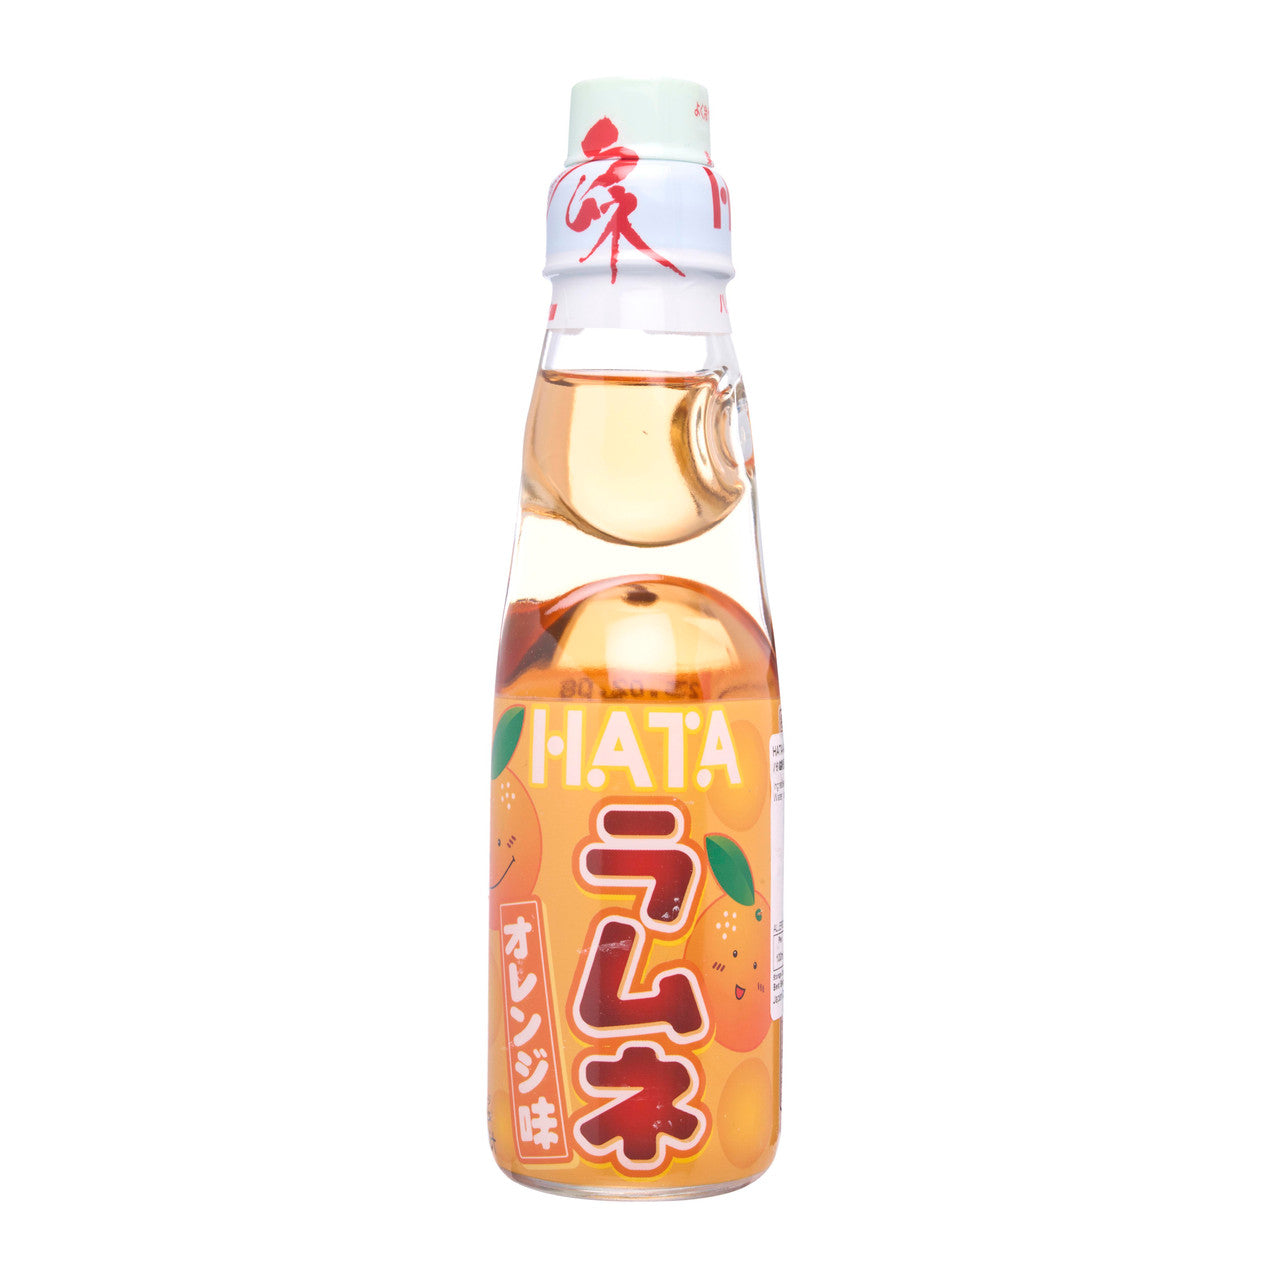 Hatakosen Orange Ramune Soda - 200ml